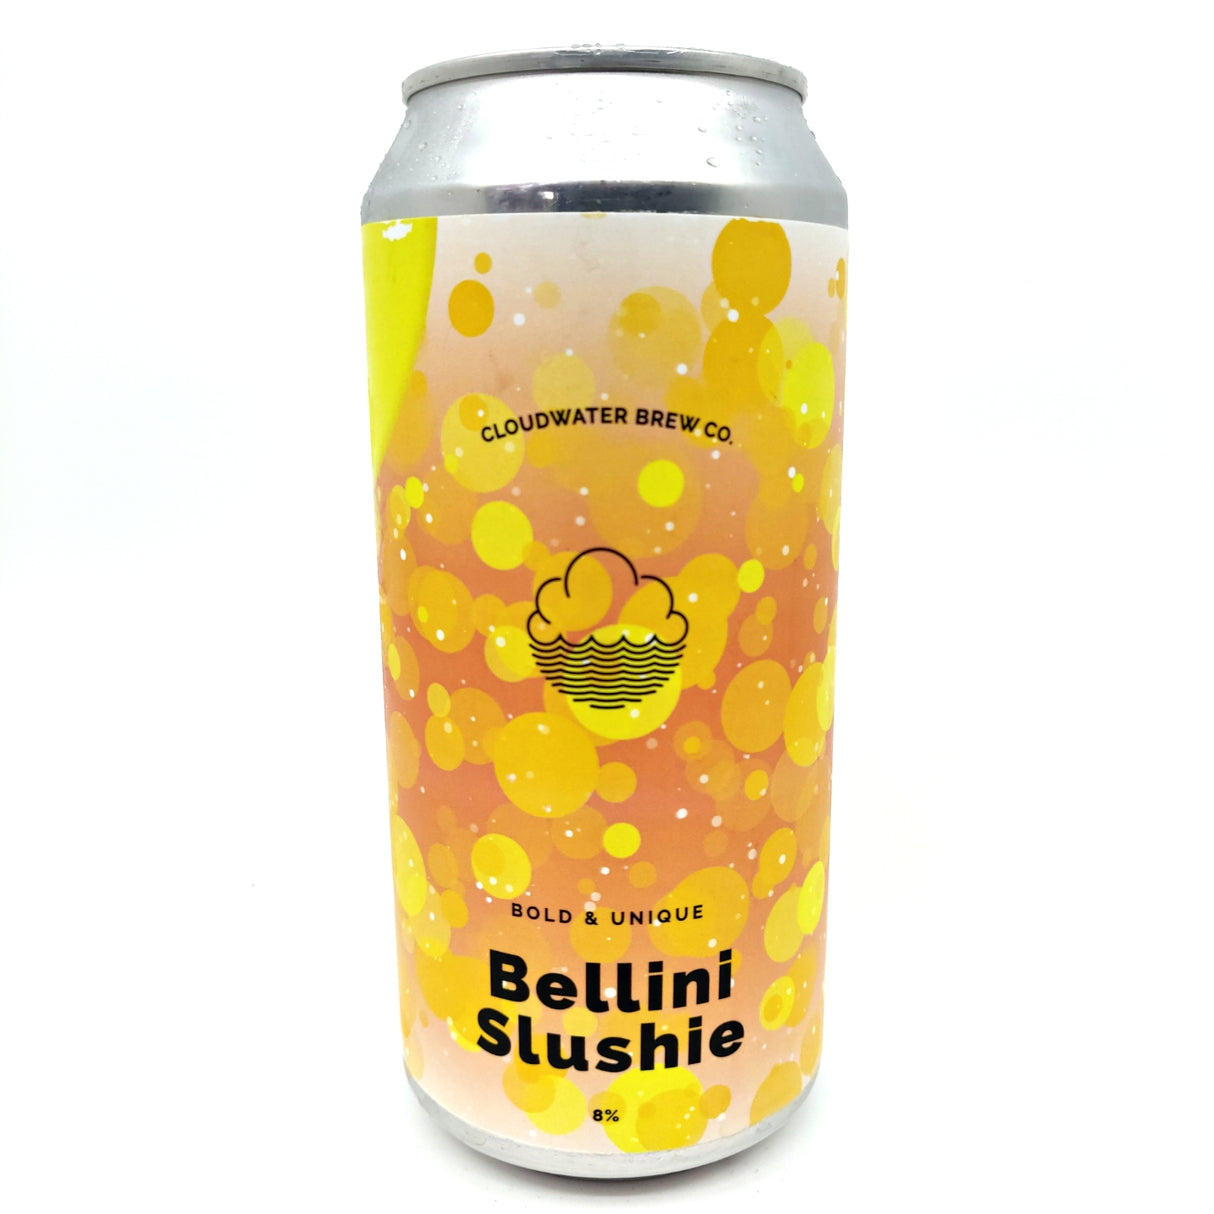 Cloudwater Peach Bellini Slushie 8% (440ml can)-Hop Burns & Black